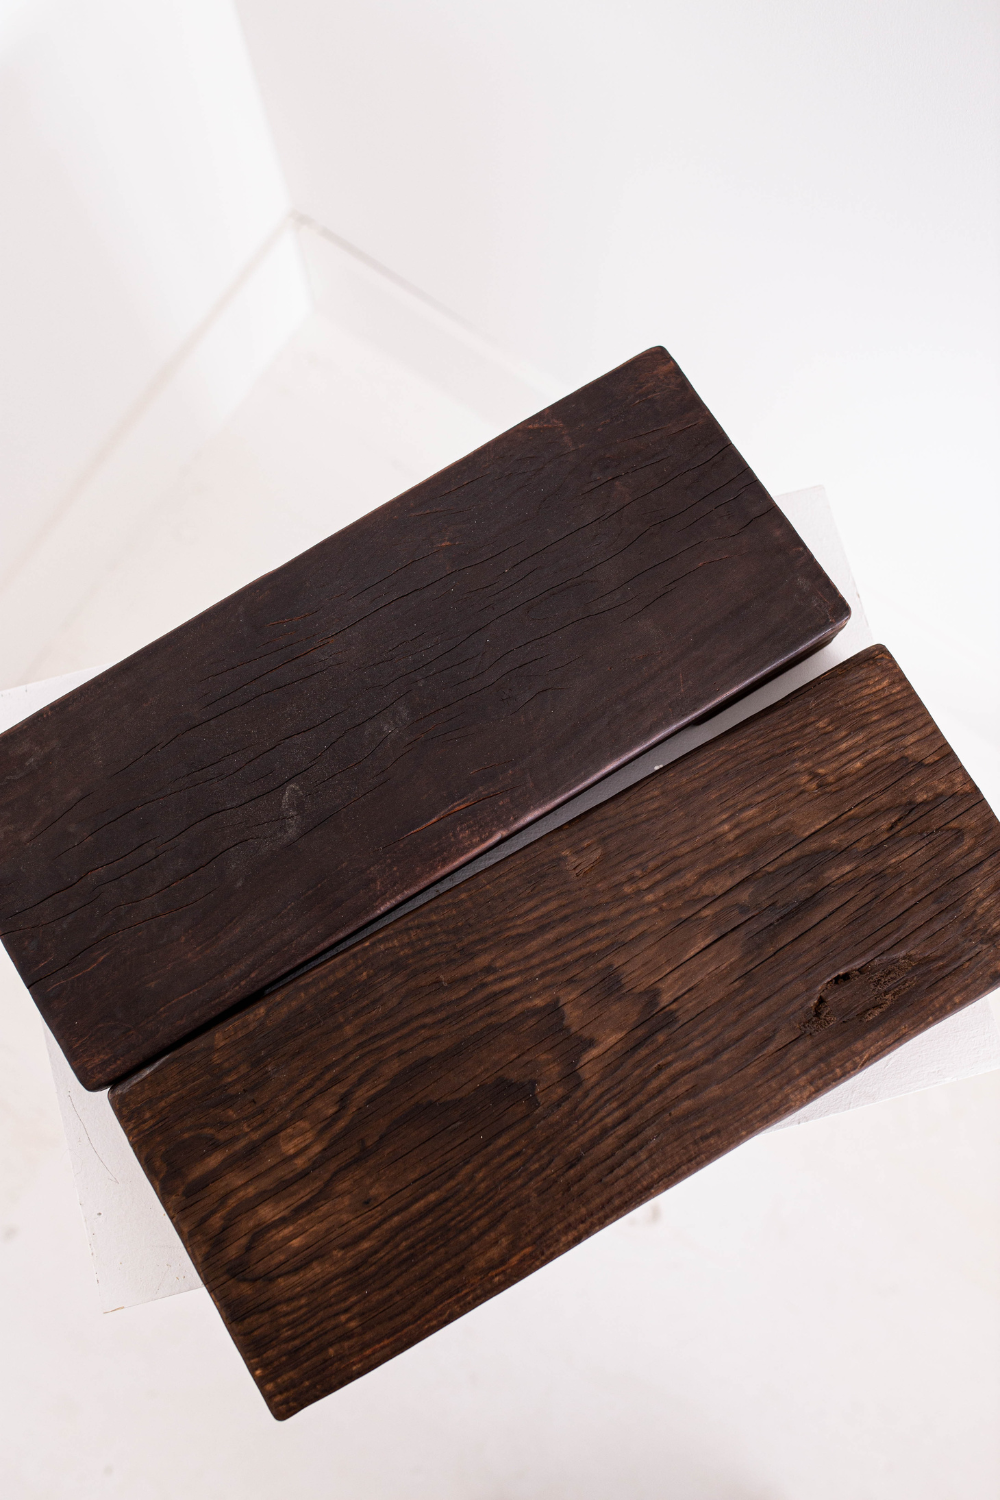 Trivet Riser Solid Reclaimed Wood Hazelnut Stain Large - Luxe B Co